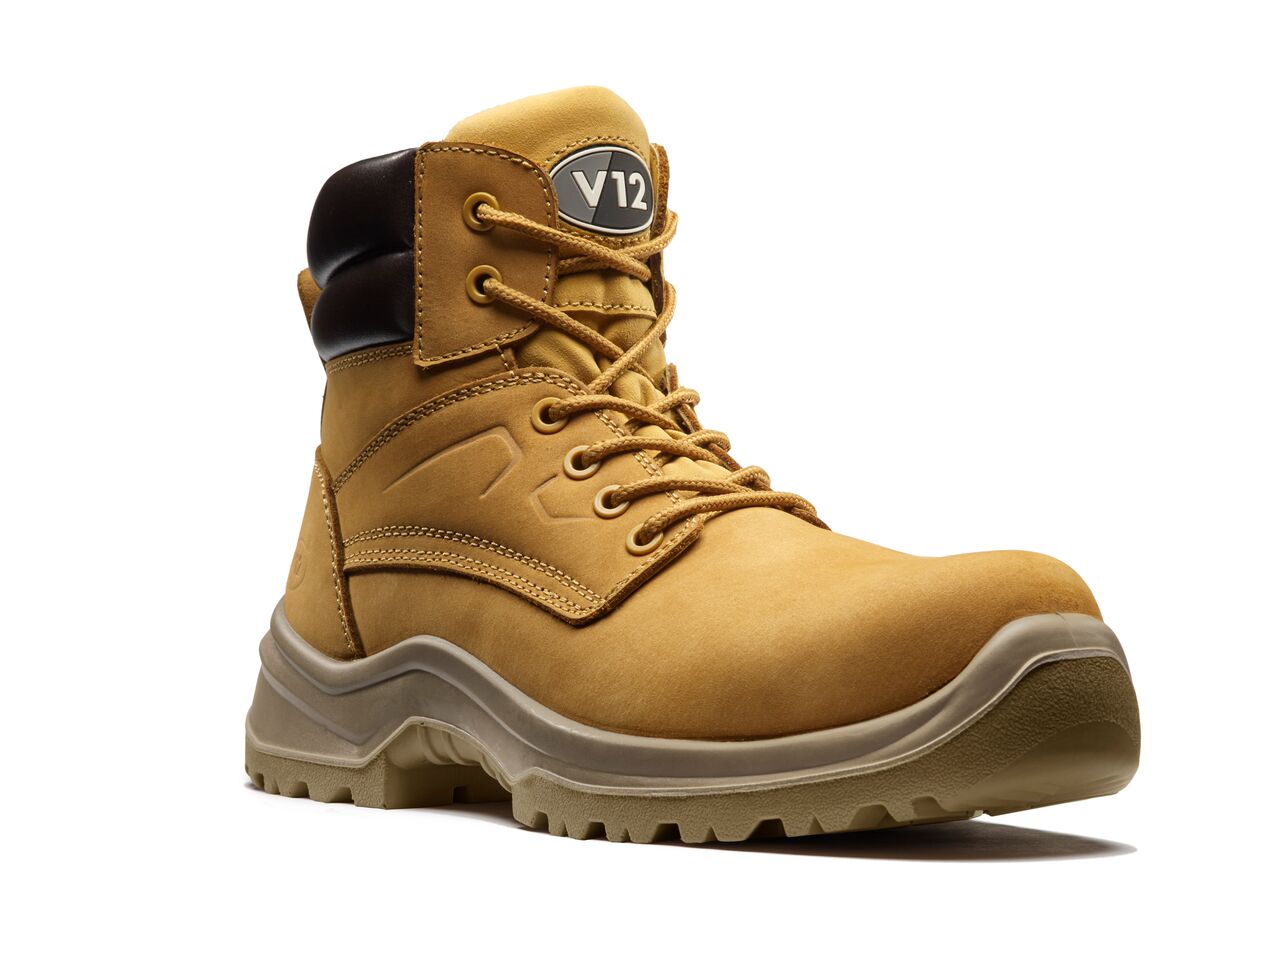 v12 work boots sale